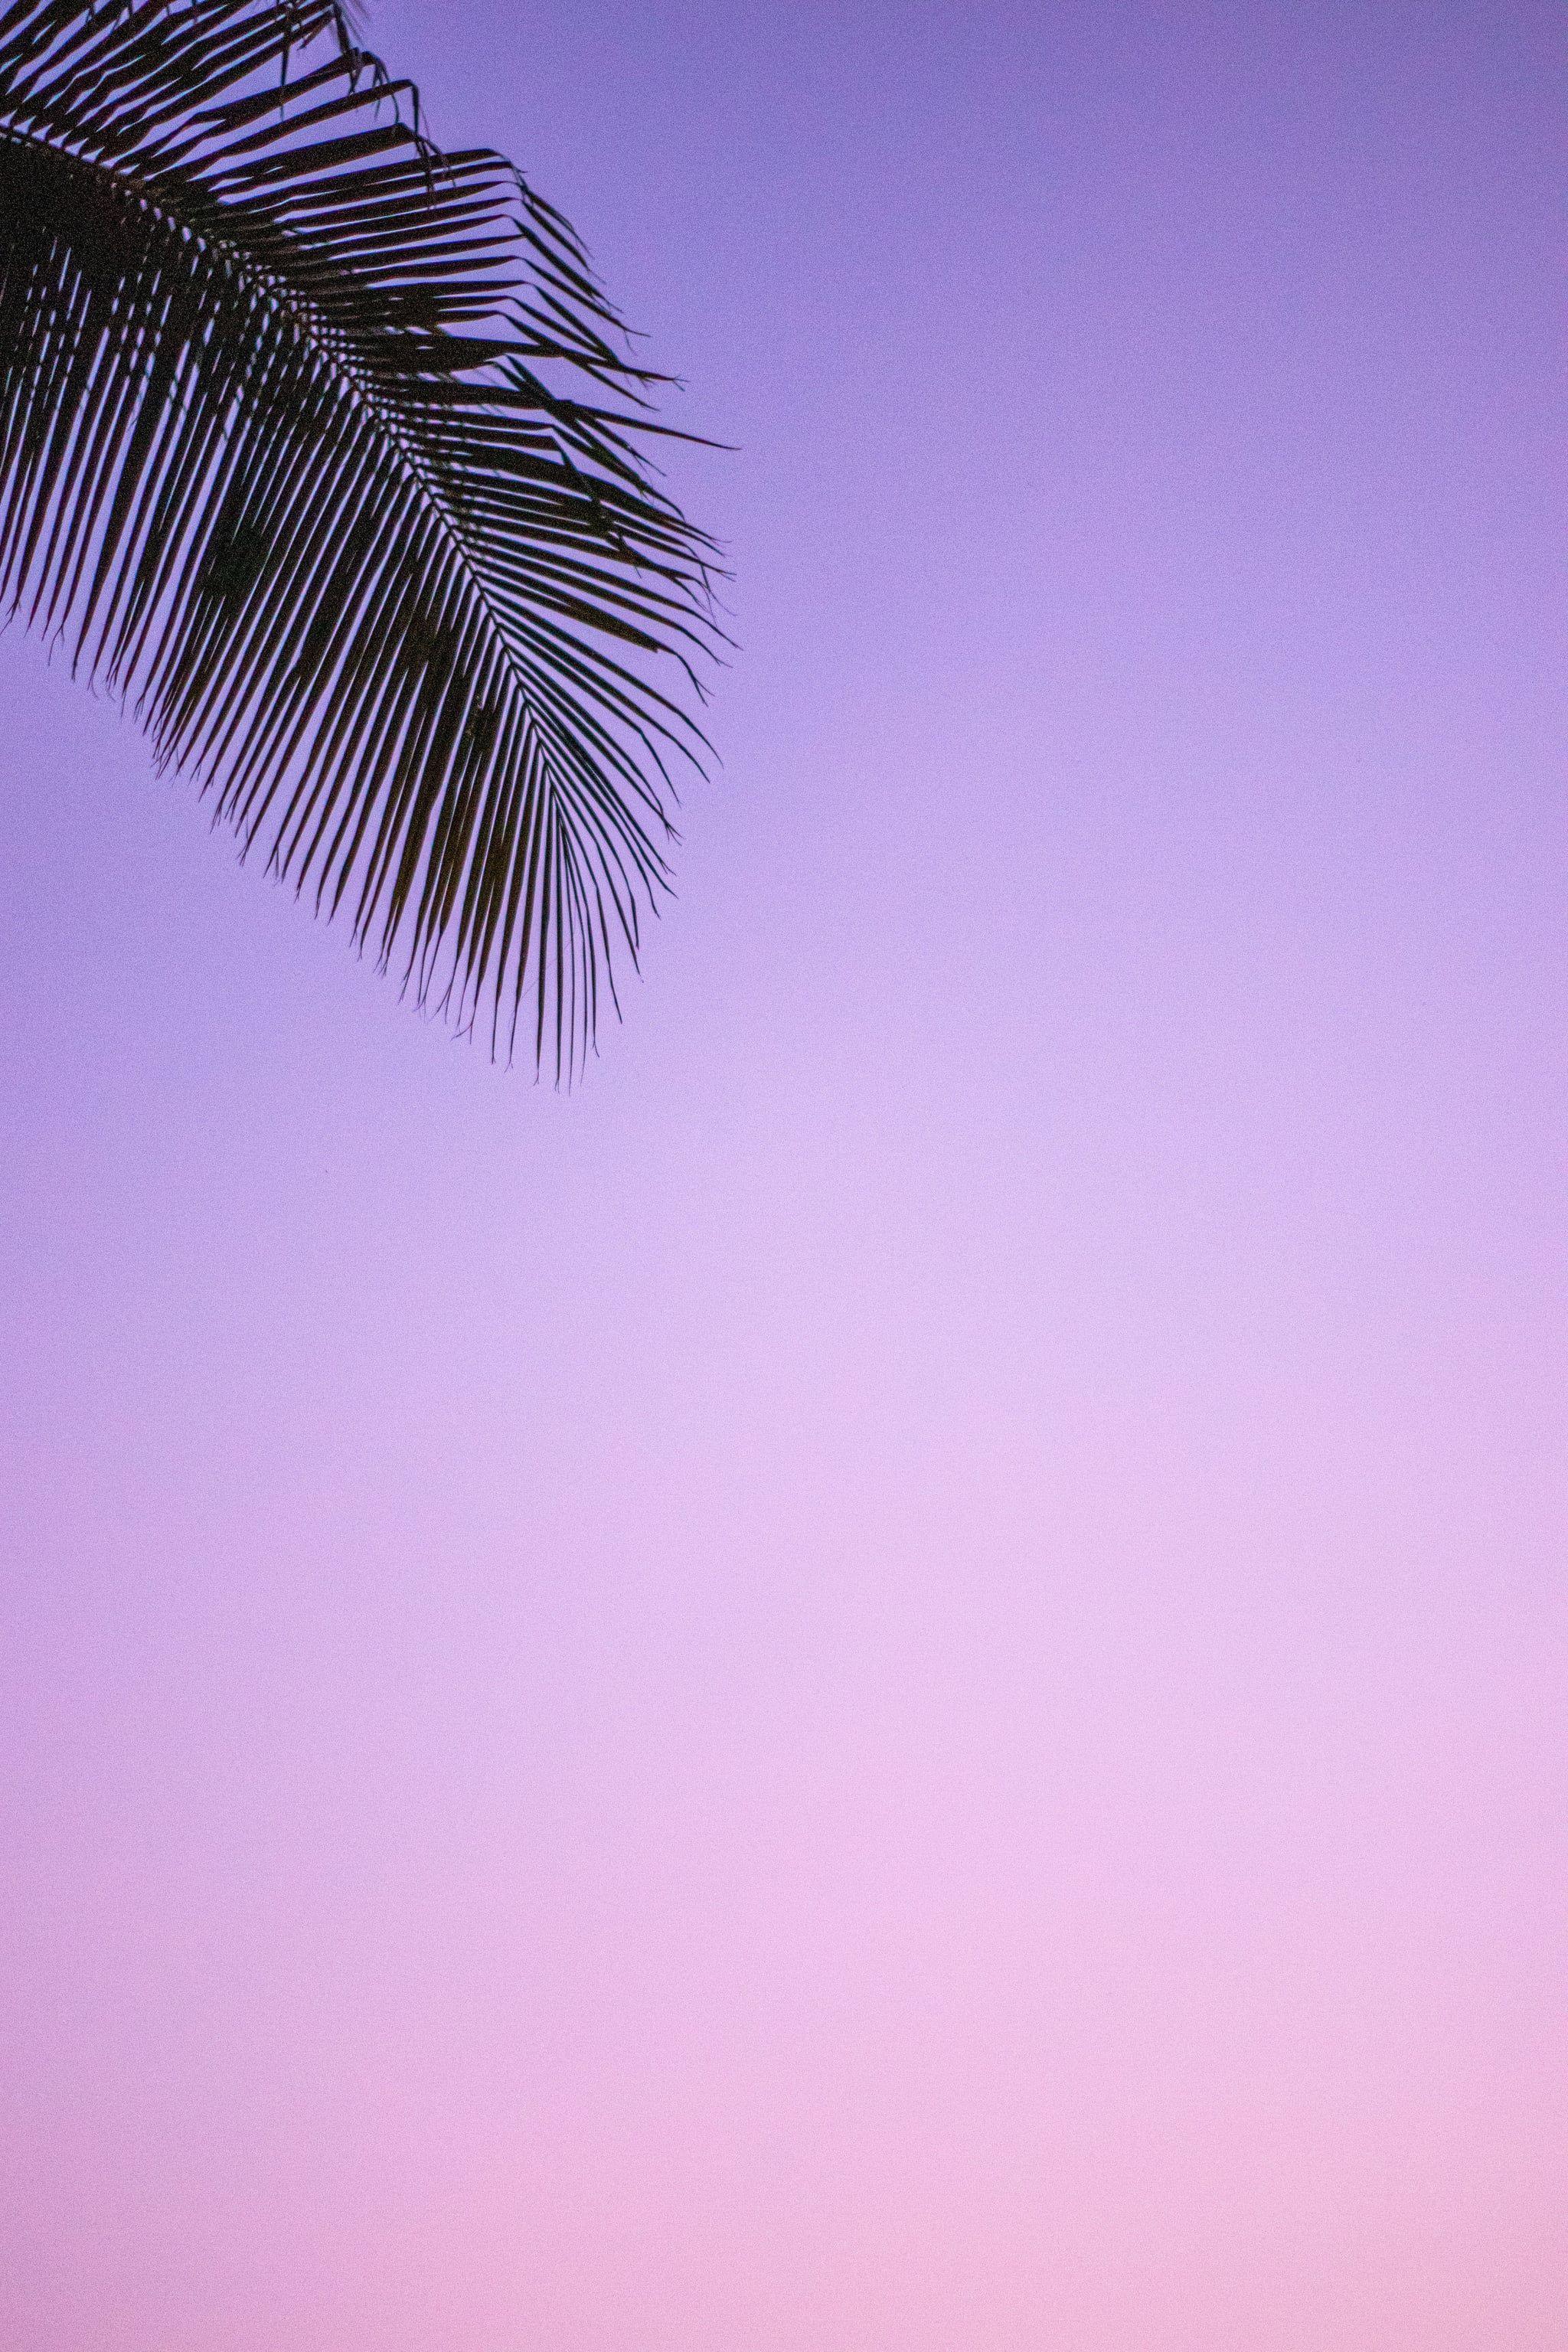 Simple Aesthetic Purple Background